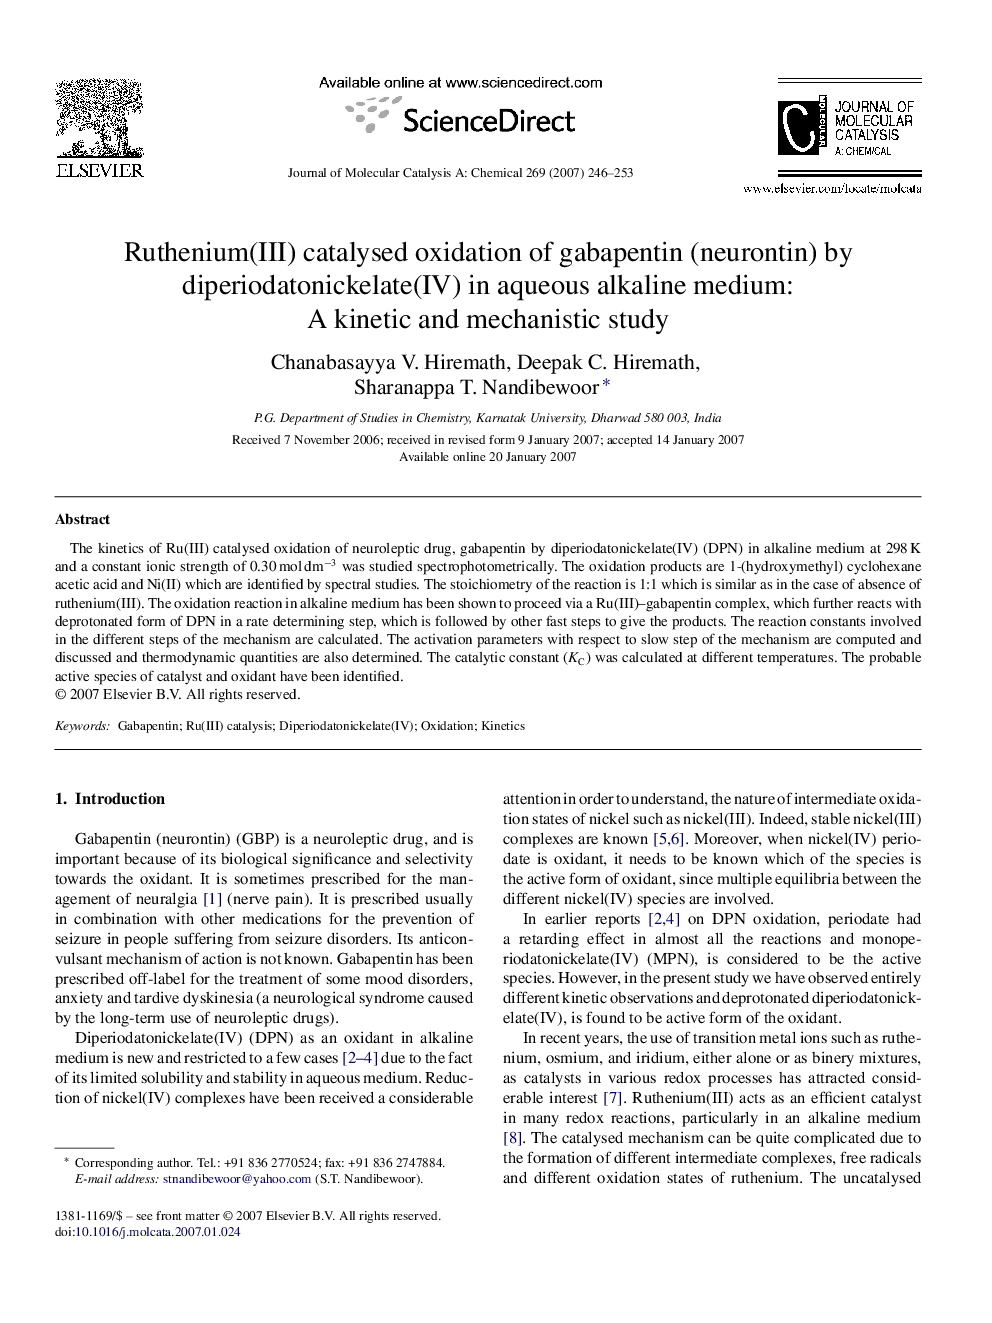 Ruthenium(III) catalysed oxidation of gabapentin (neurontin) by diperiodatonickelate(IV) in aqueous alkaline medium: A kinetic and mechanistic study